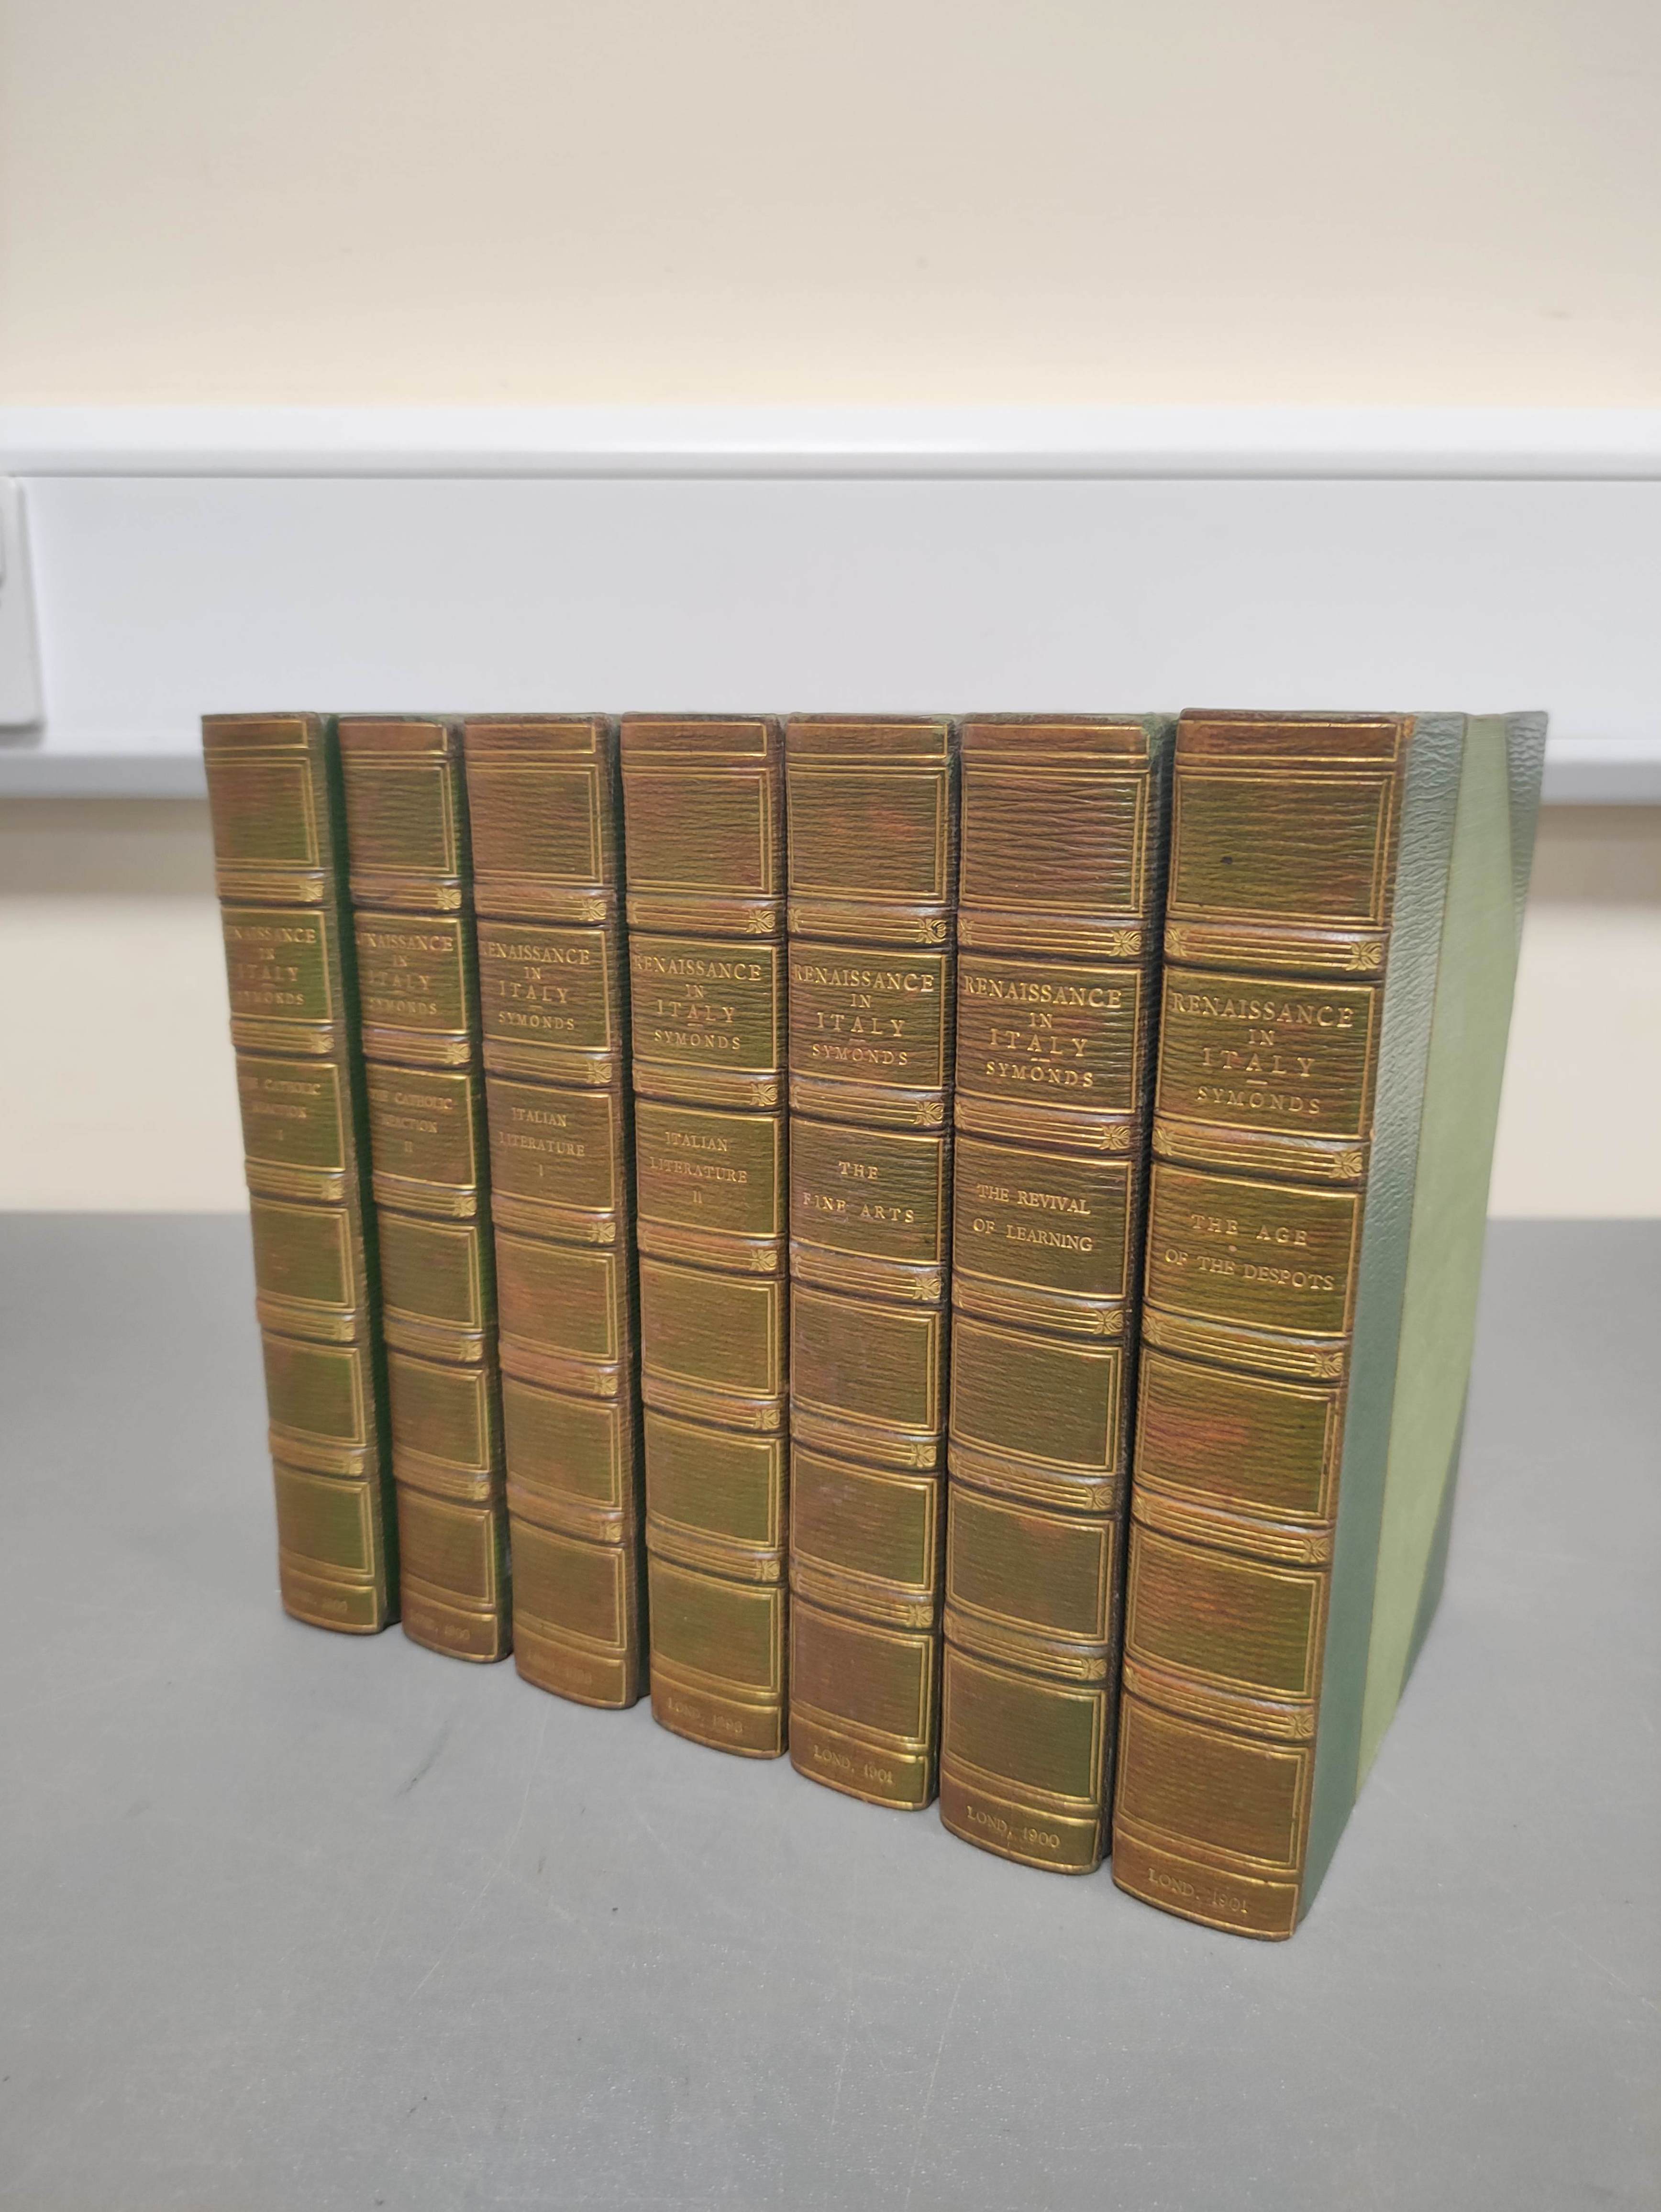 SYMONDS JOHN ADDINGTON.  Renaissance in Italy. 5 vols. Frontis. Handsome green half morocco. 1898-